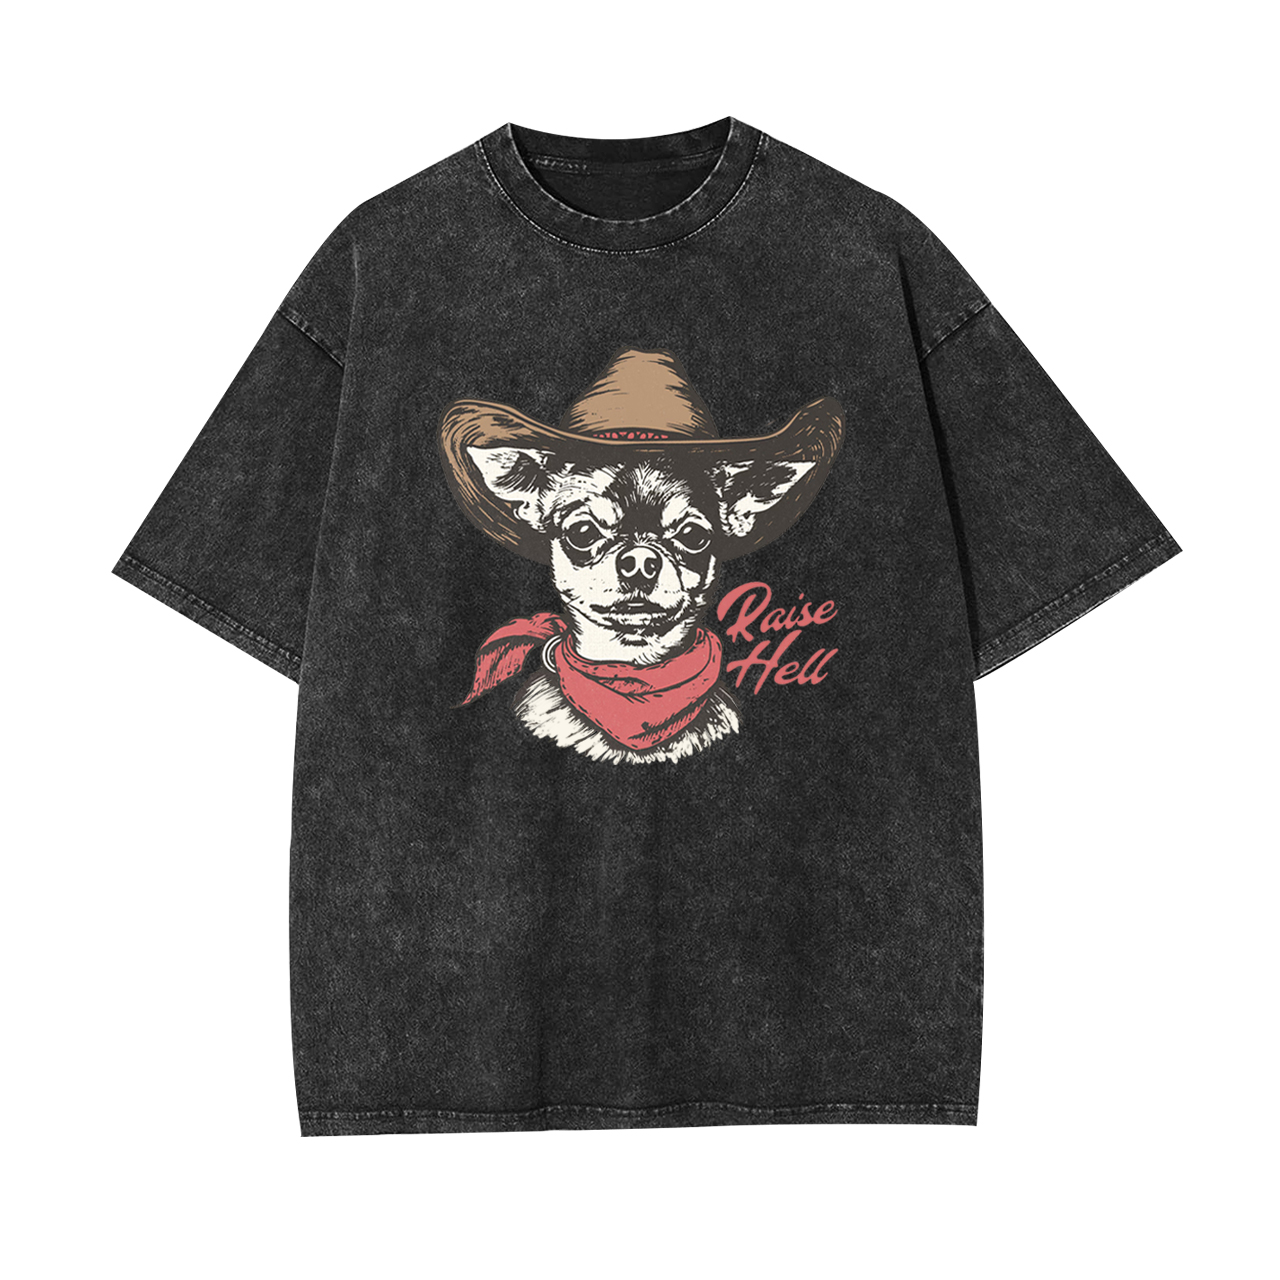 Cowboy Chihuahua,Raise Hell Garment-dye Tees